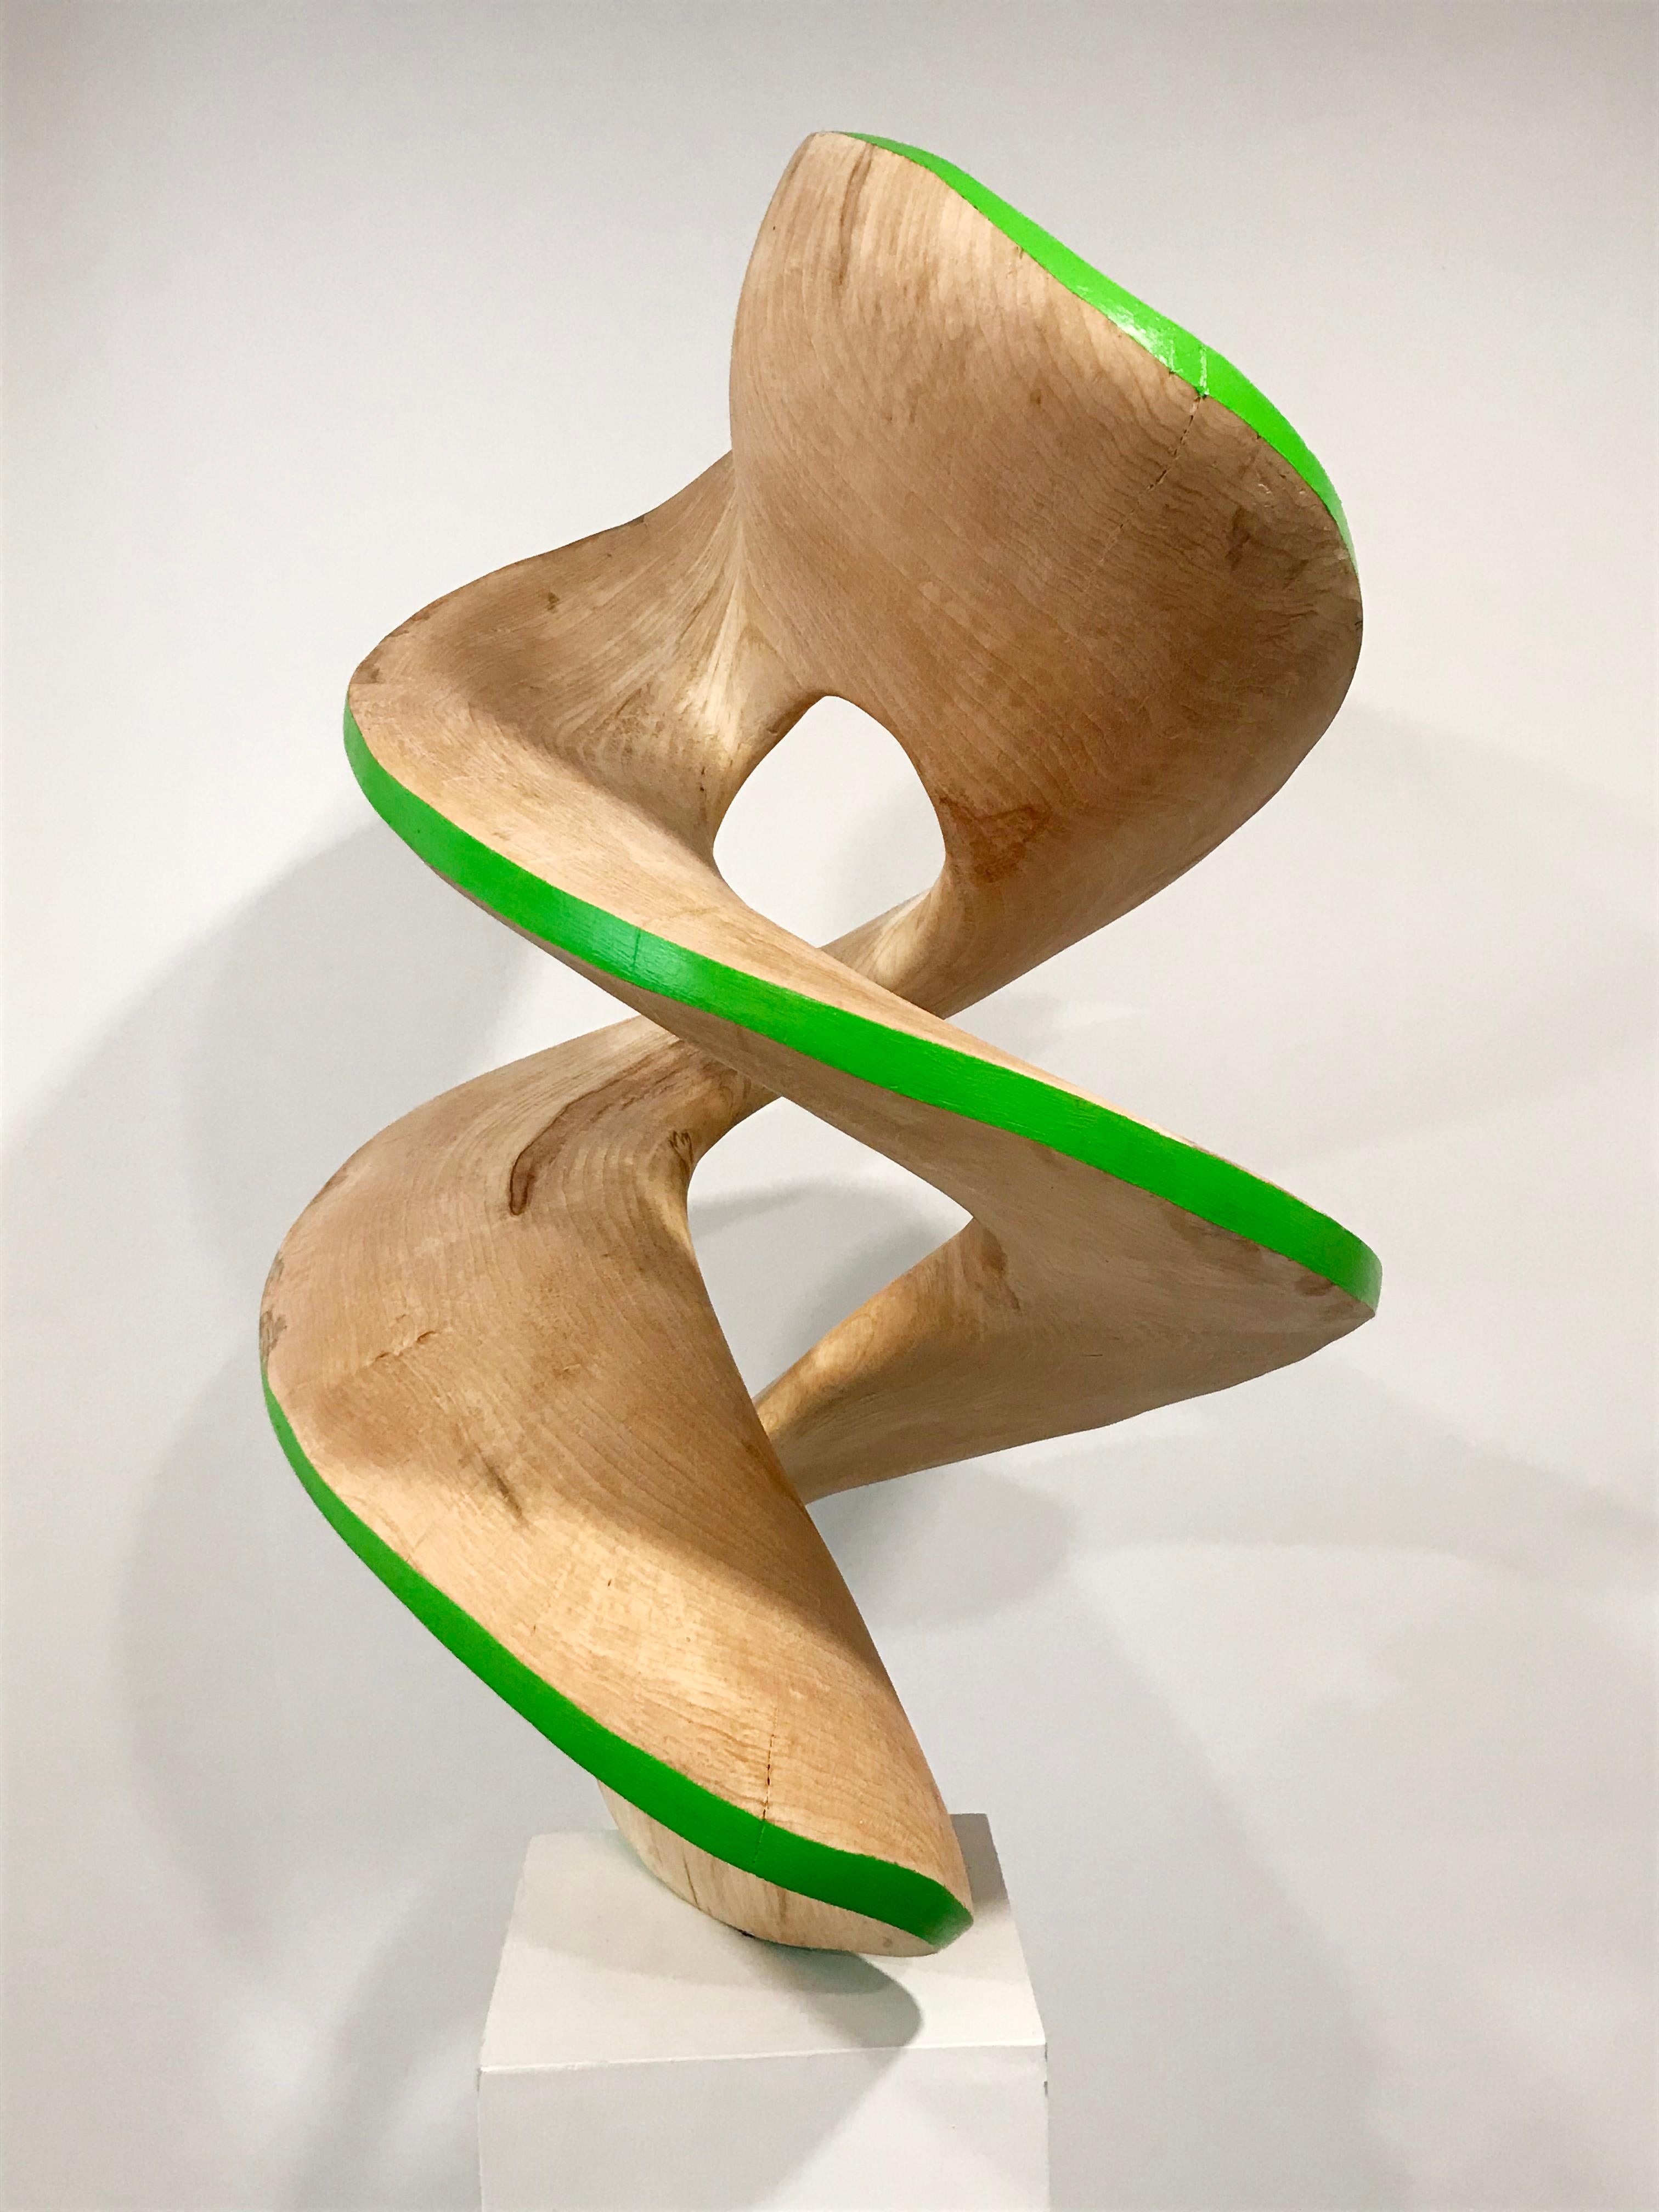 Spiral#3-Green, large maple sculpture